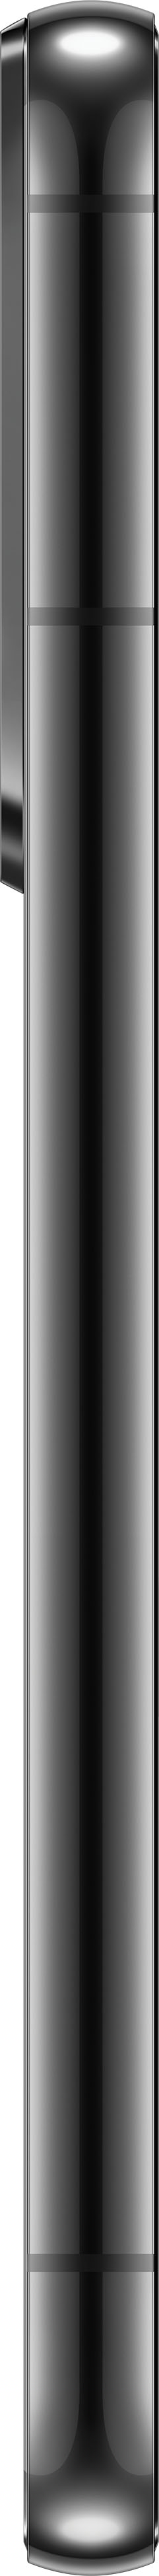 Samsung Galaxy S22 128GB (Unlocked) Phantom Black  - Best Buy